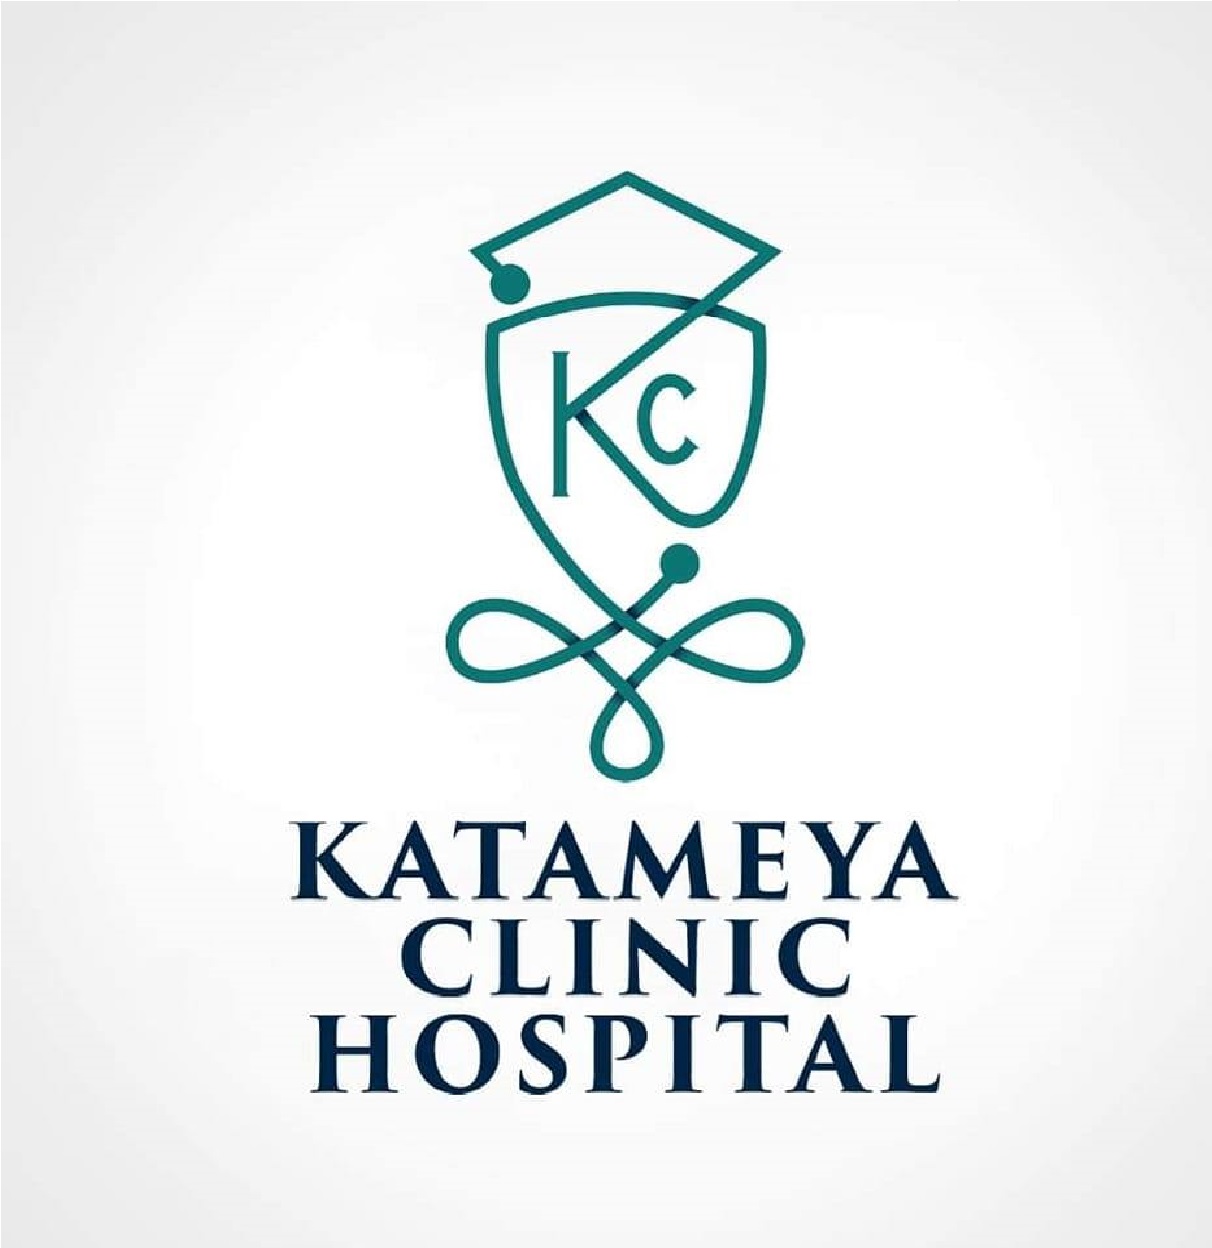 Kattameya clinic Hospital